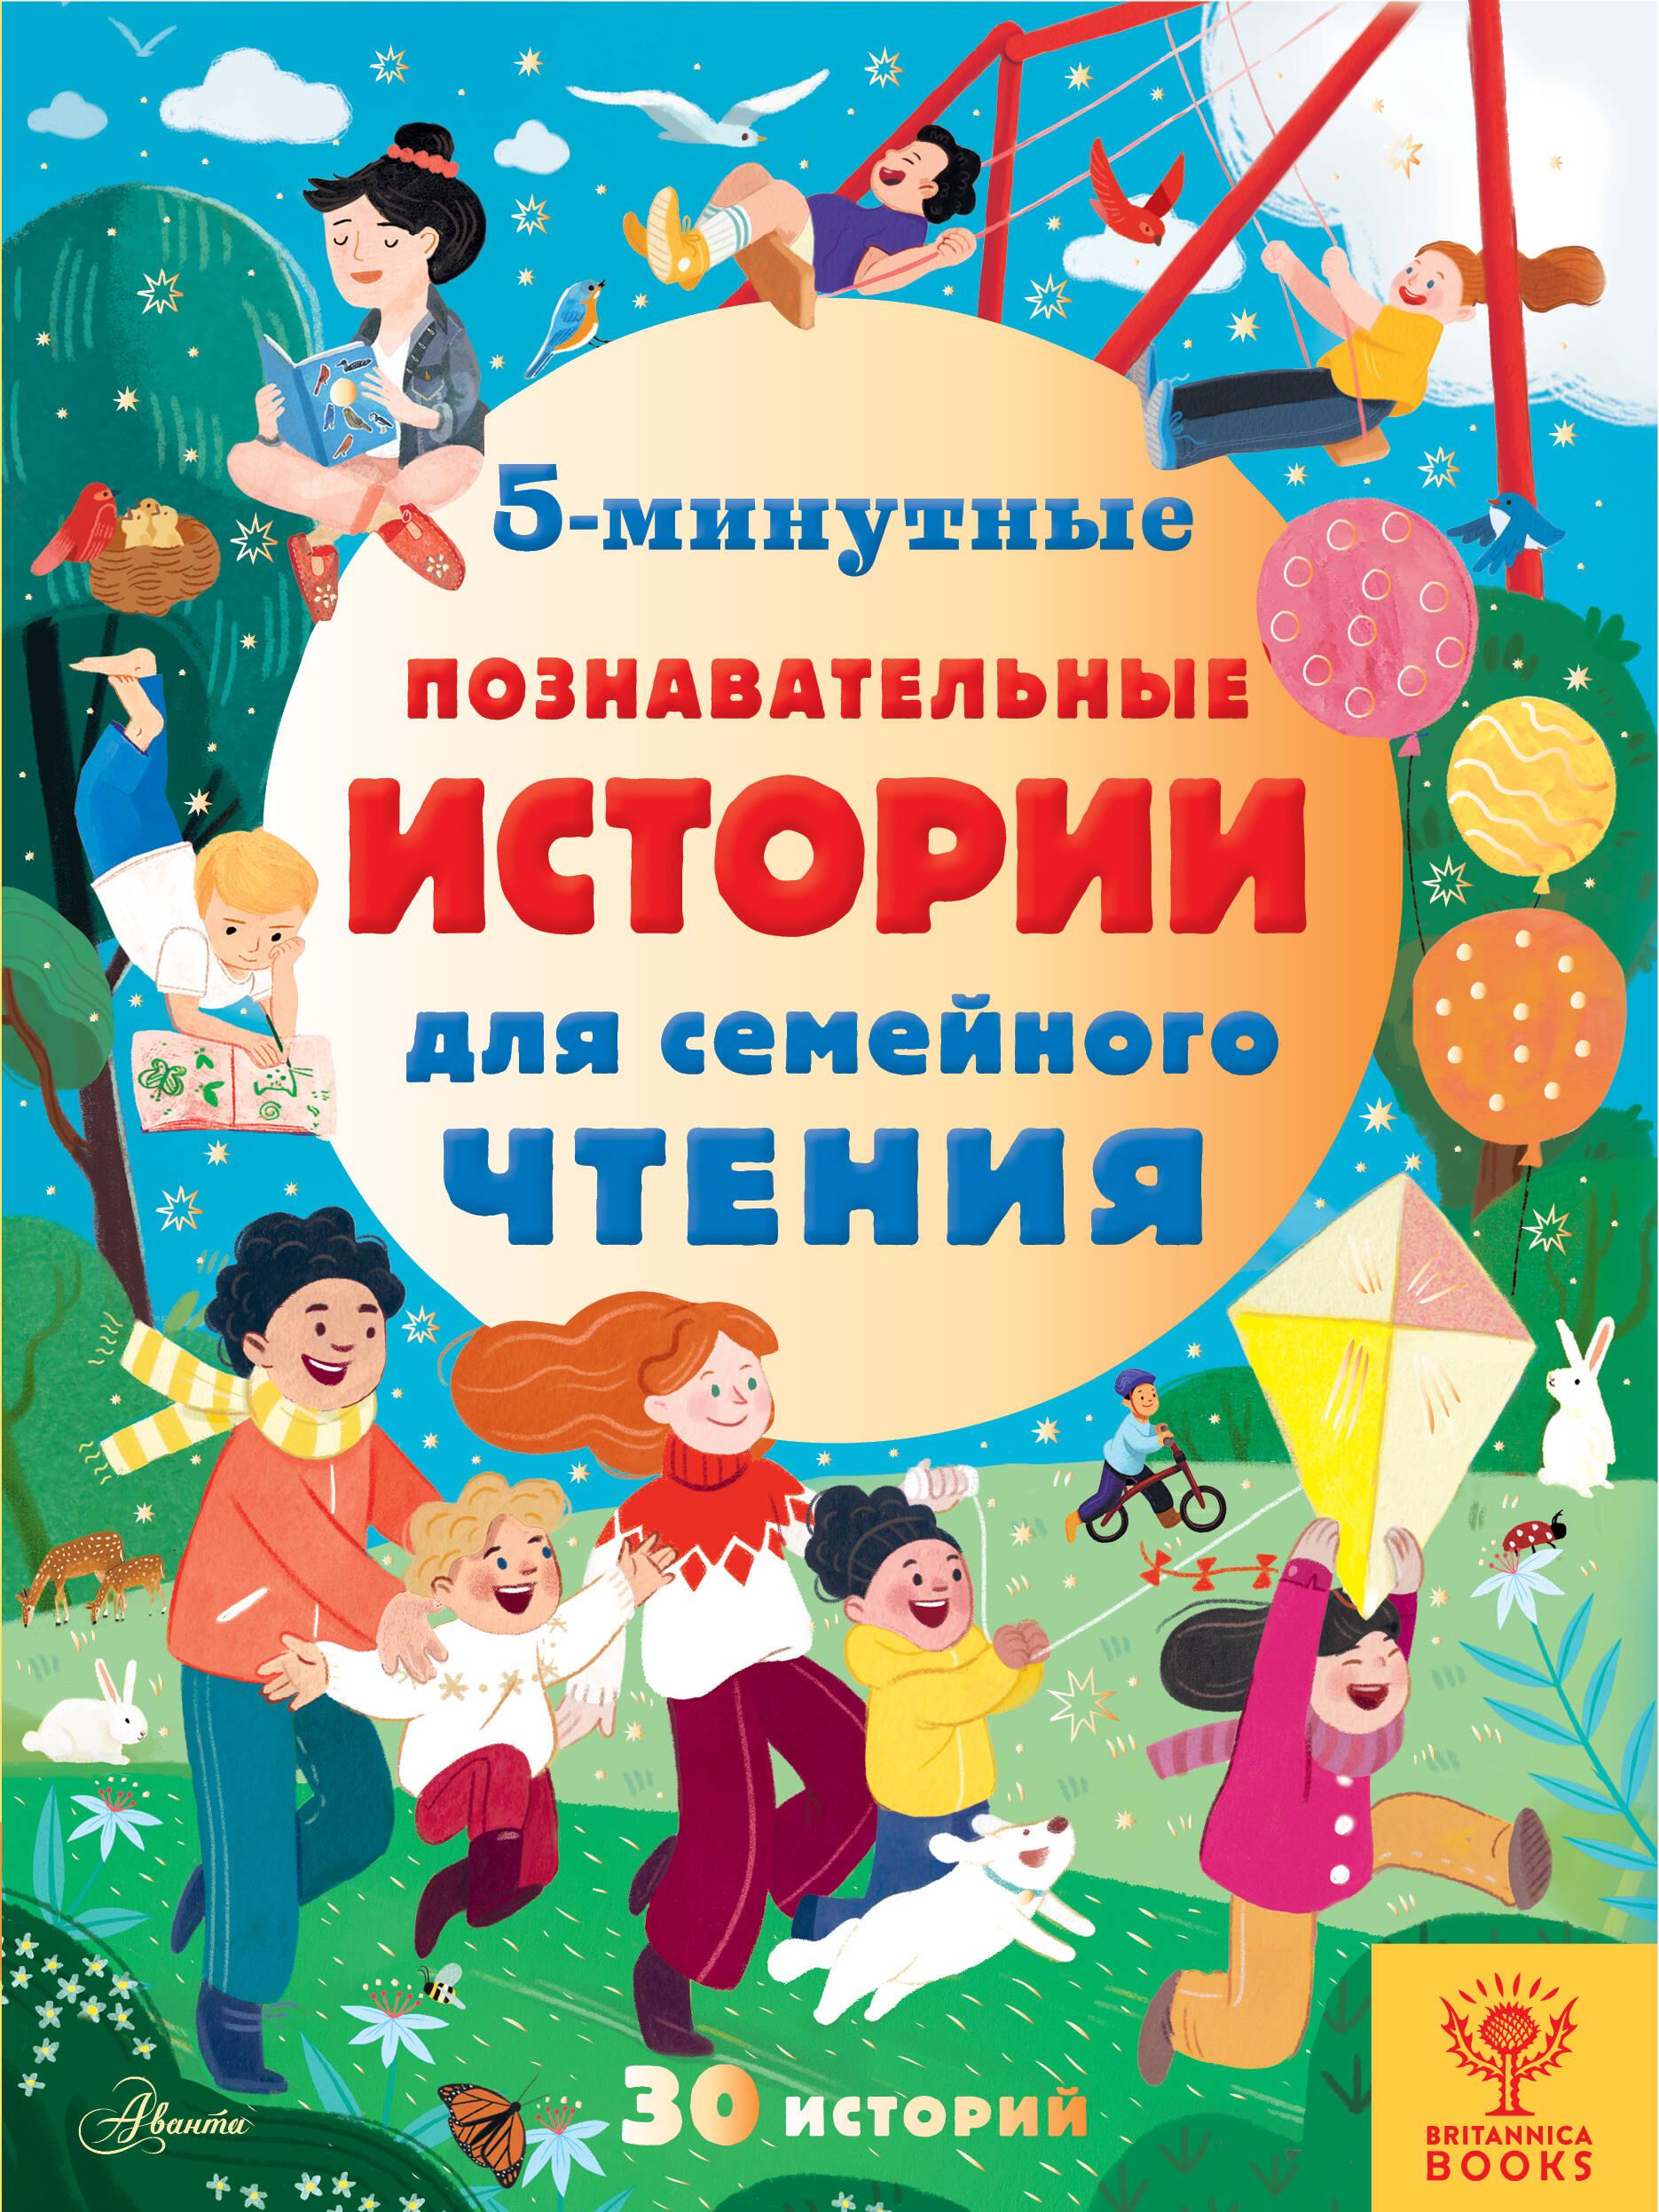 https://cdn.book24.ru/v2/ASE000000000865104/COVER/cover13d.jpg